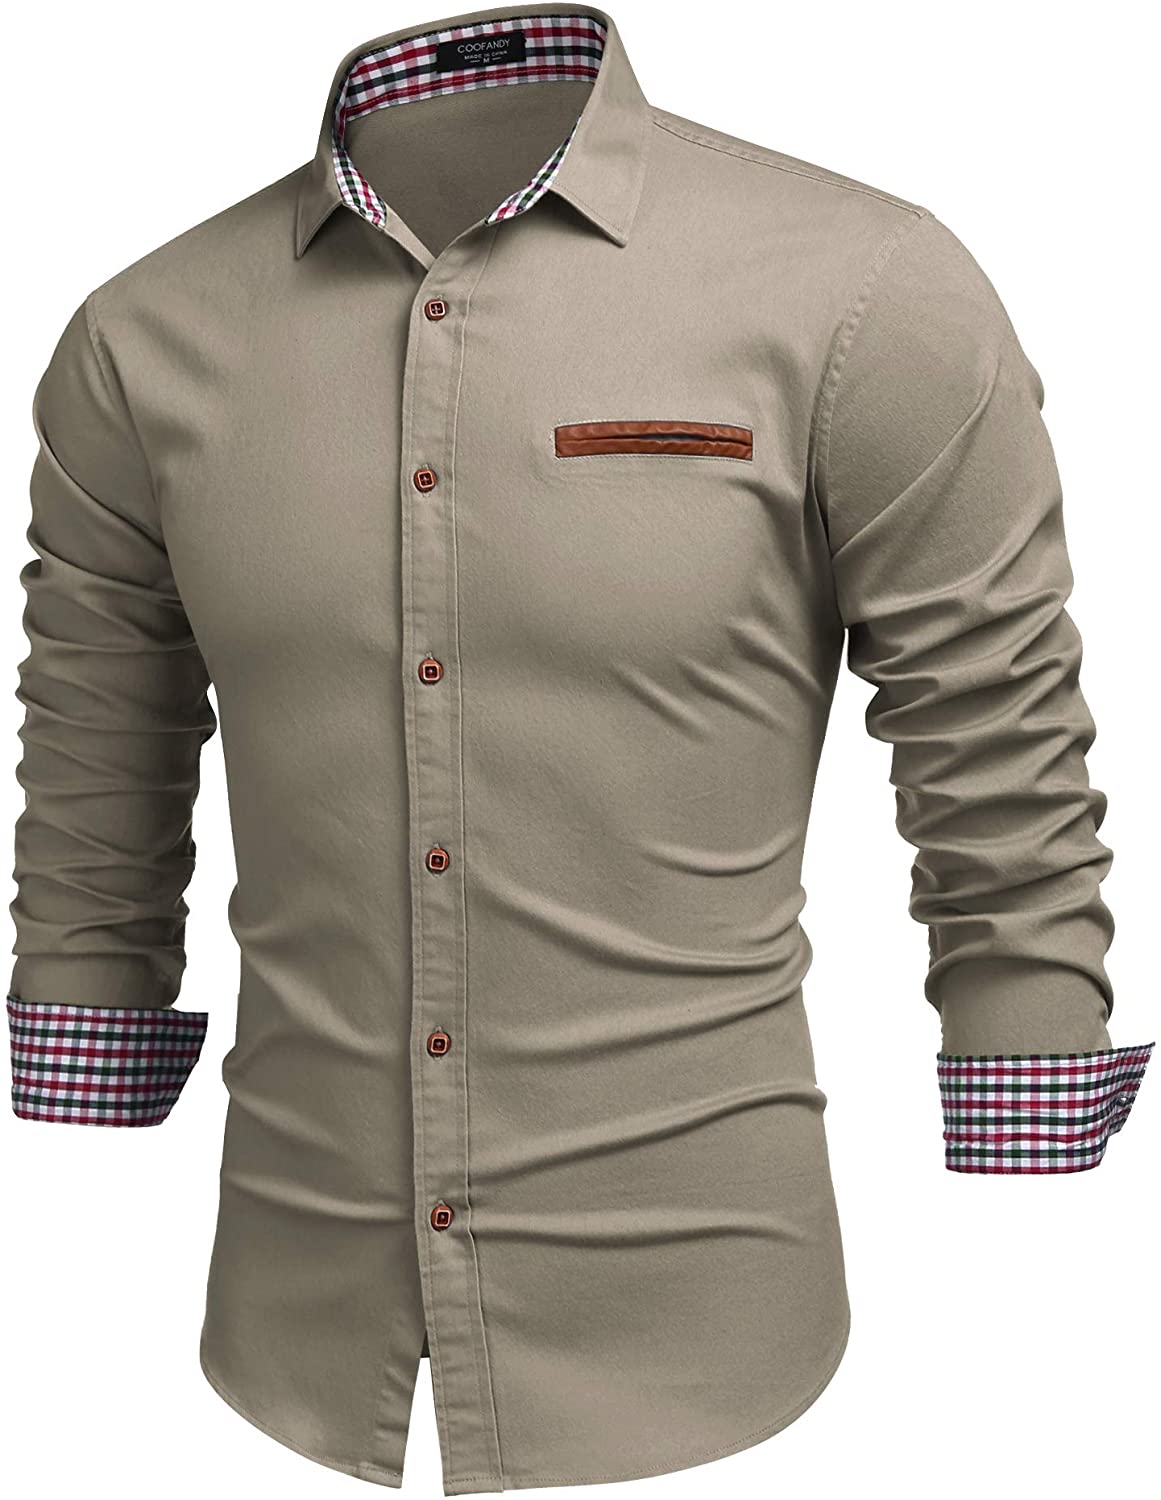 COOFANDY Men's Casual Dress Shirt Button Down Shirts Long-Sleeve Denim ...